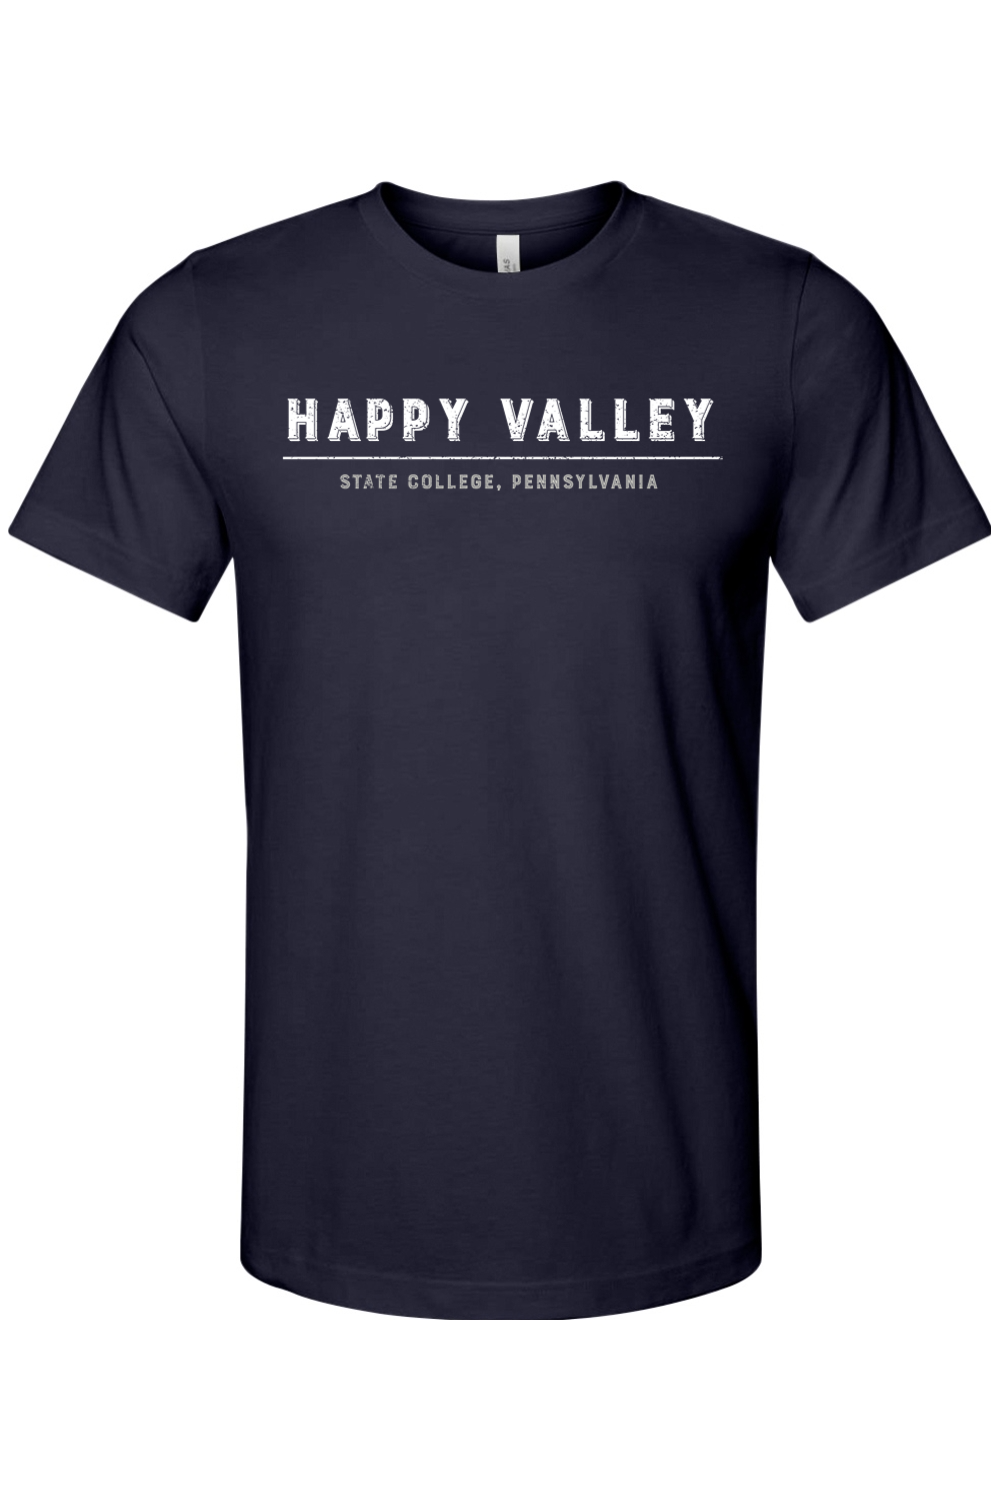 Happy Valley - State College, Pennsylvania - Yinzylvania